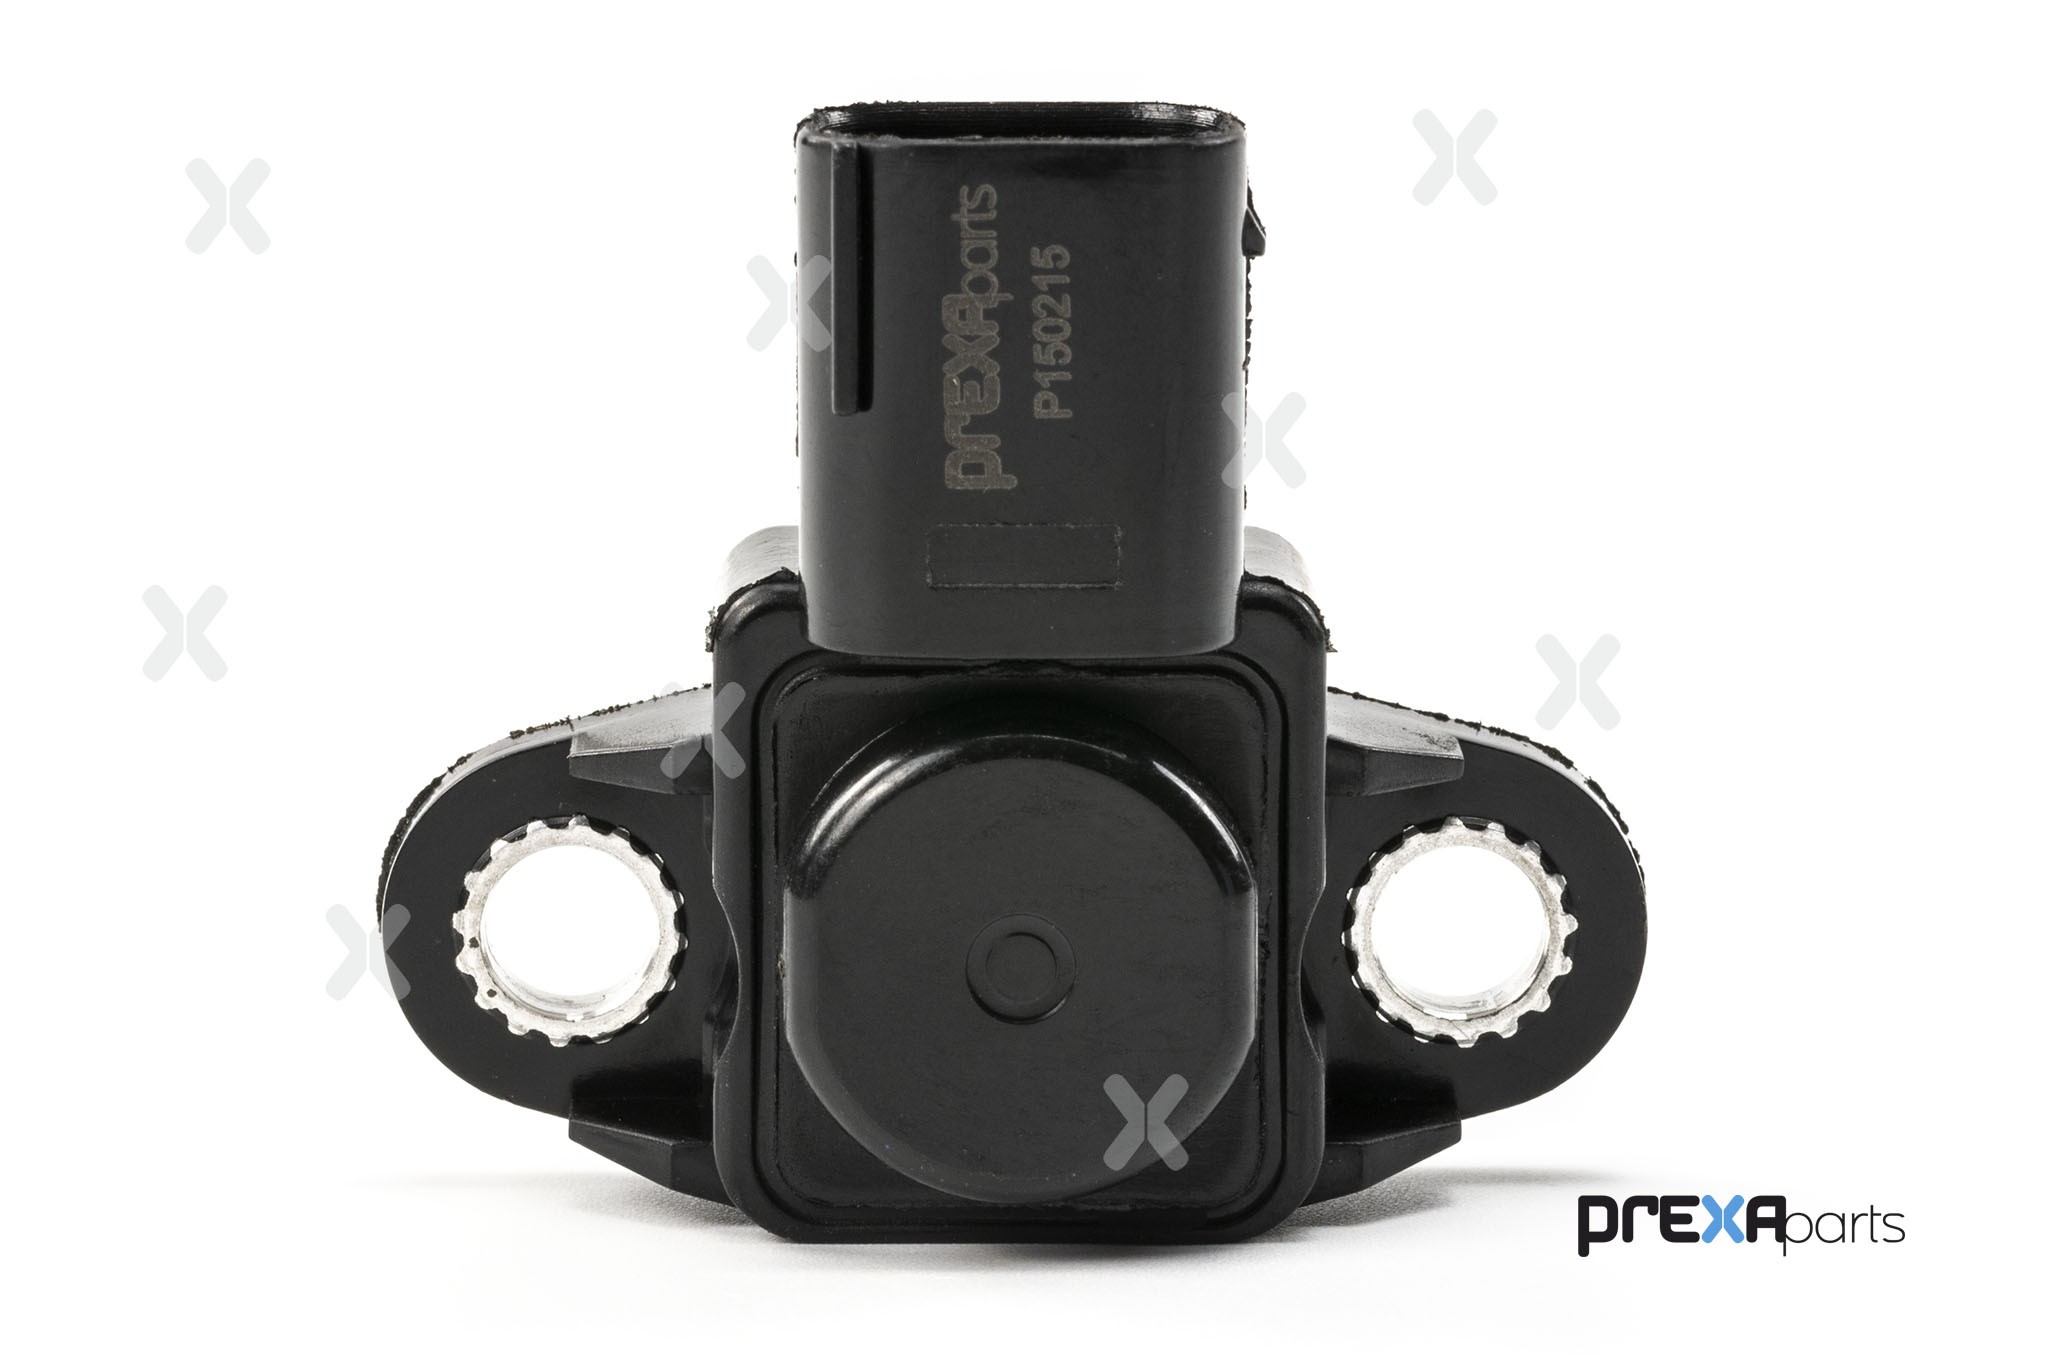 PREXAparts P150215 Intake manifold pressure sensor